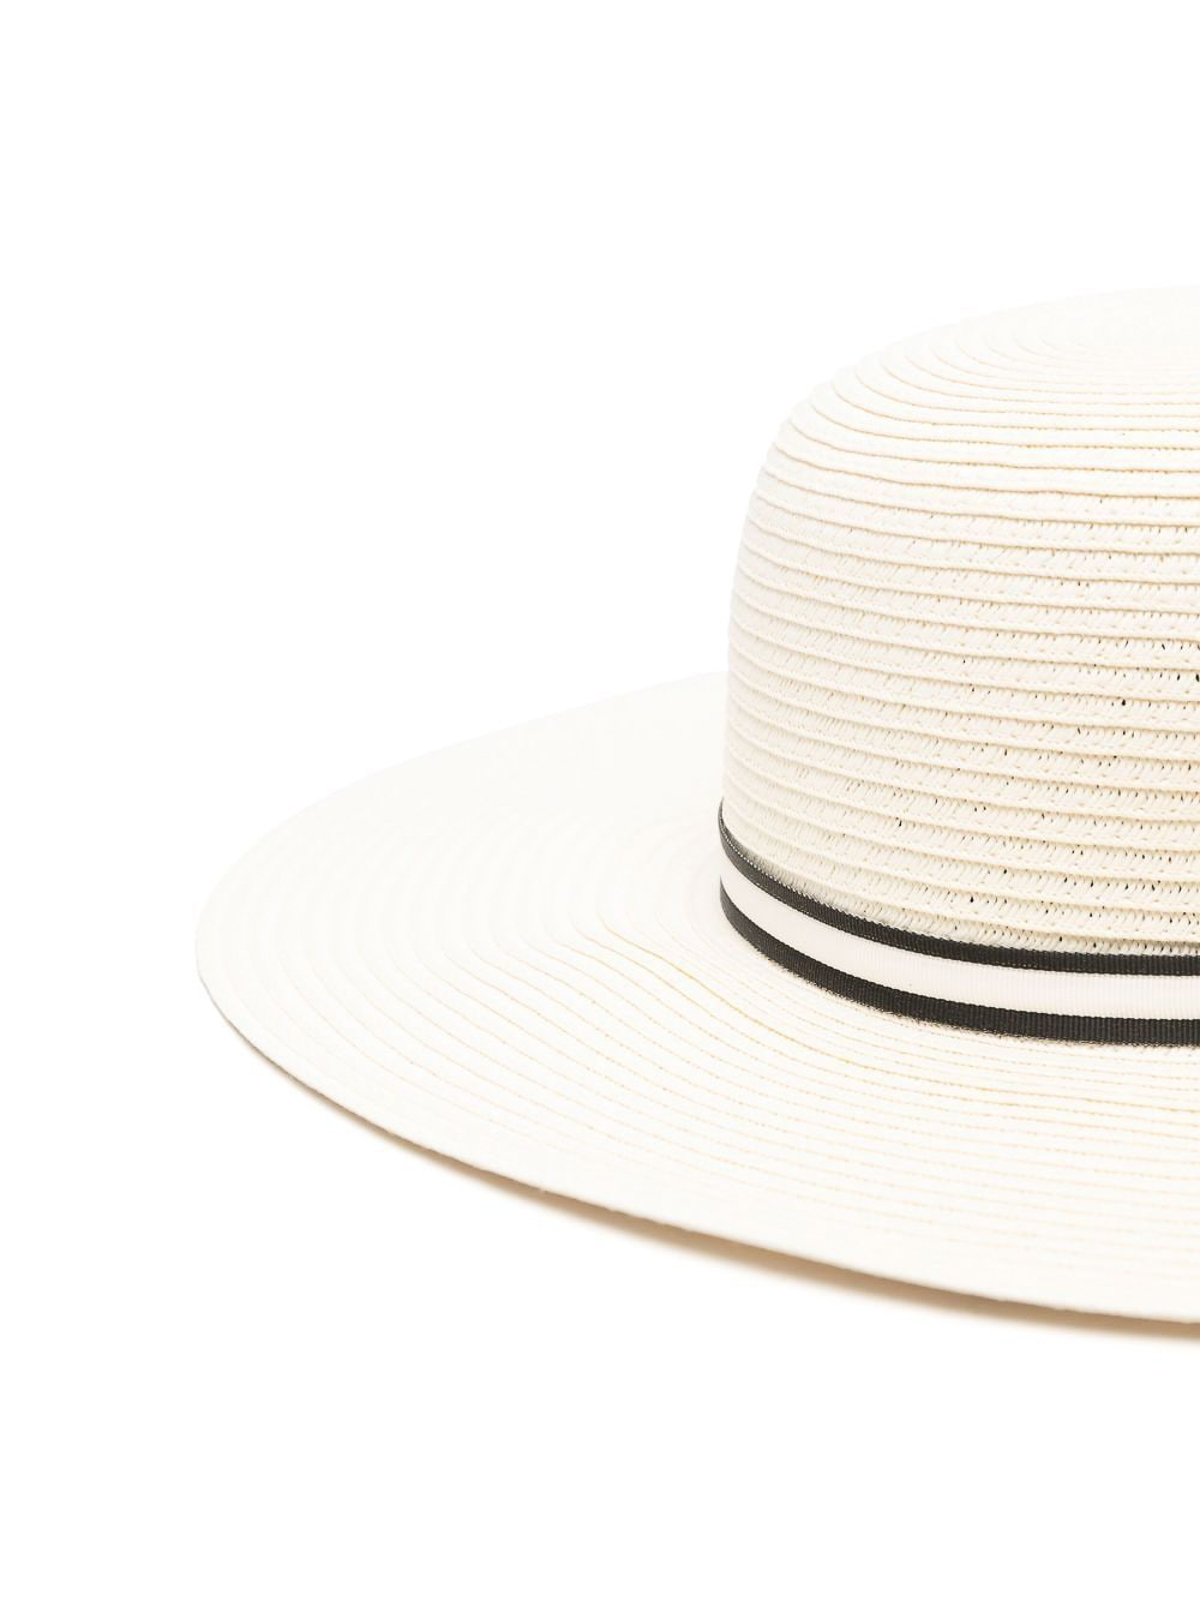 Shop Borsalino Interwoven Designed Giselle Hat In White